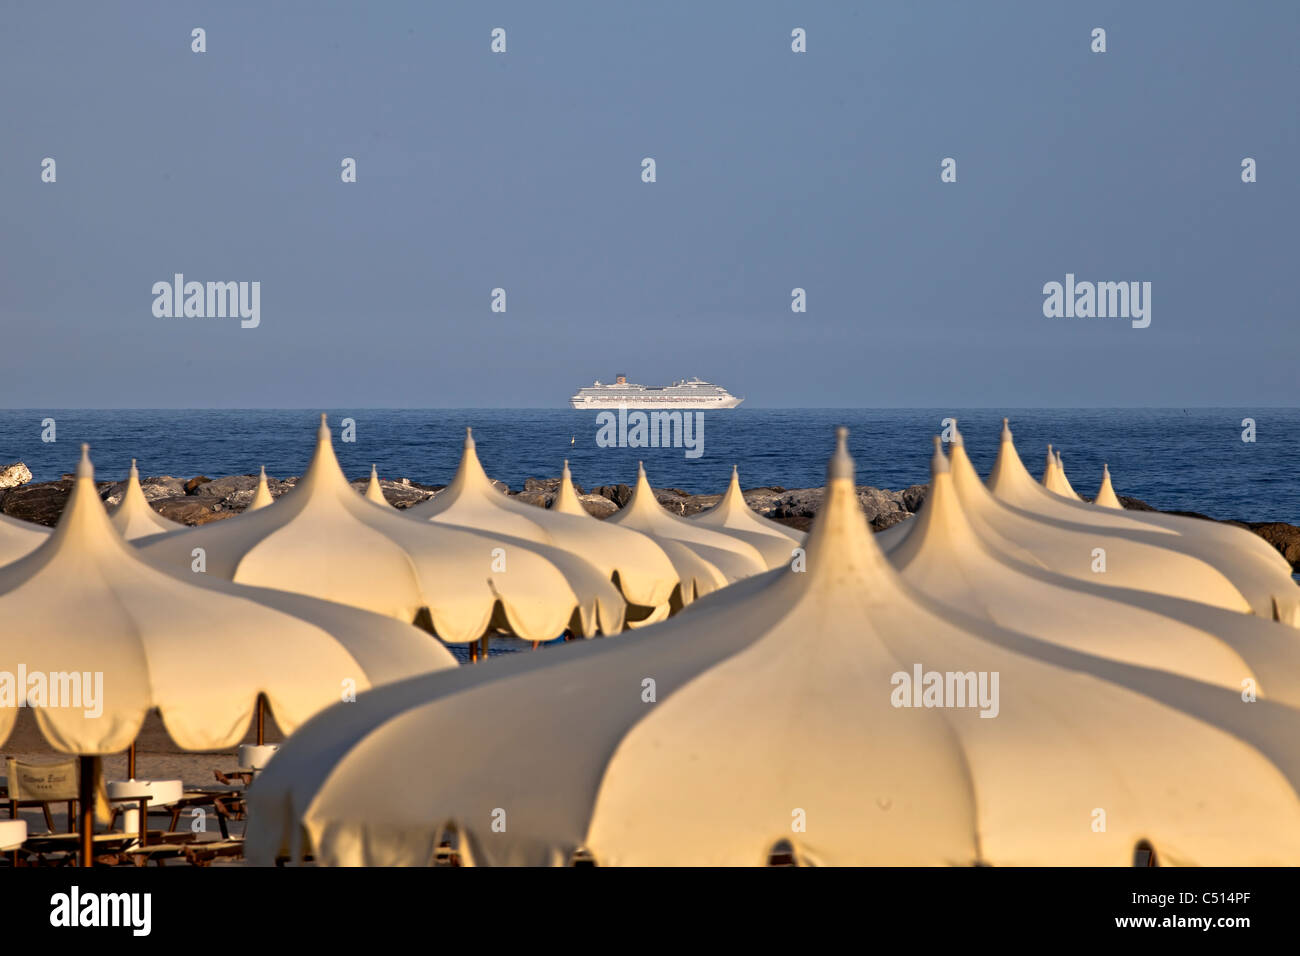 Umbrellas of the beaches on the beach of Arma di Taggia in Liguria on the Mediterranean Stock Photo